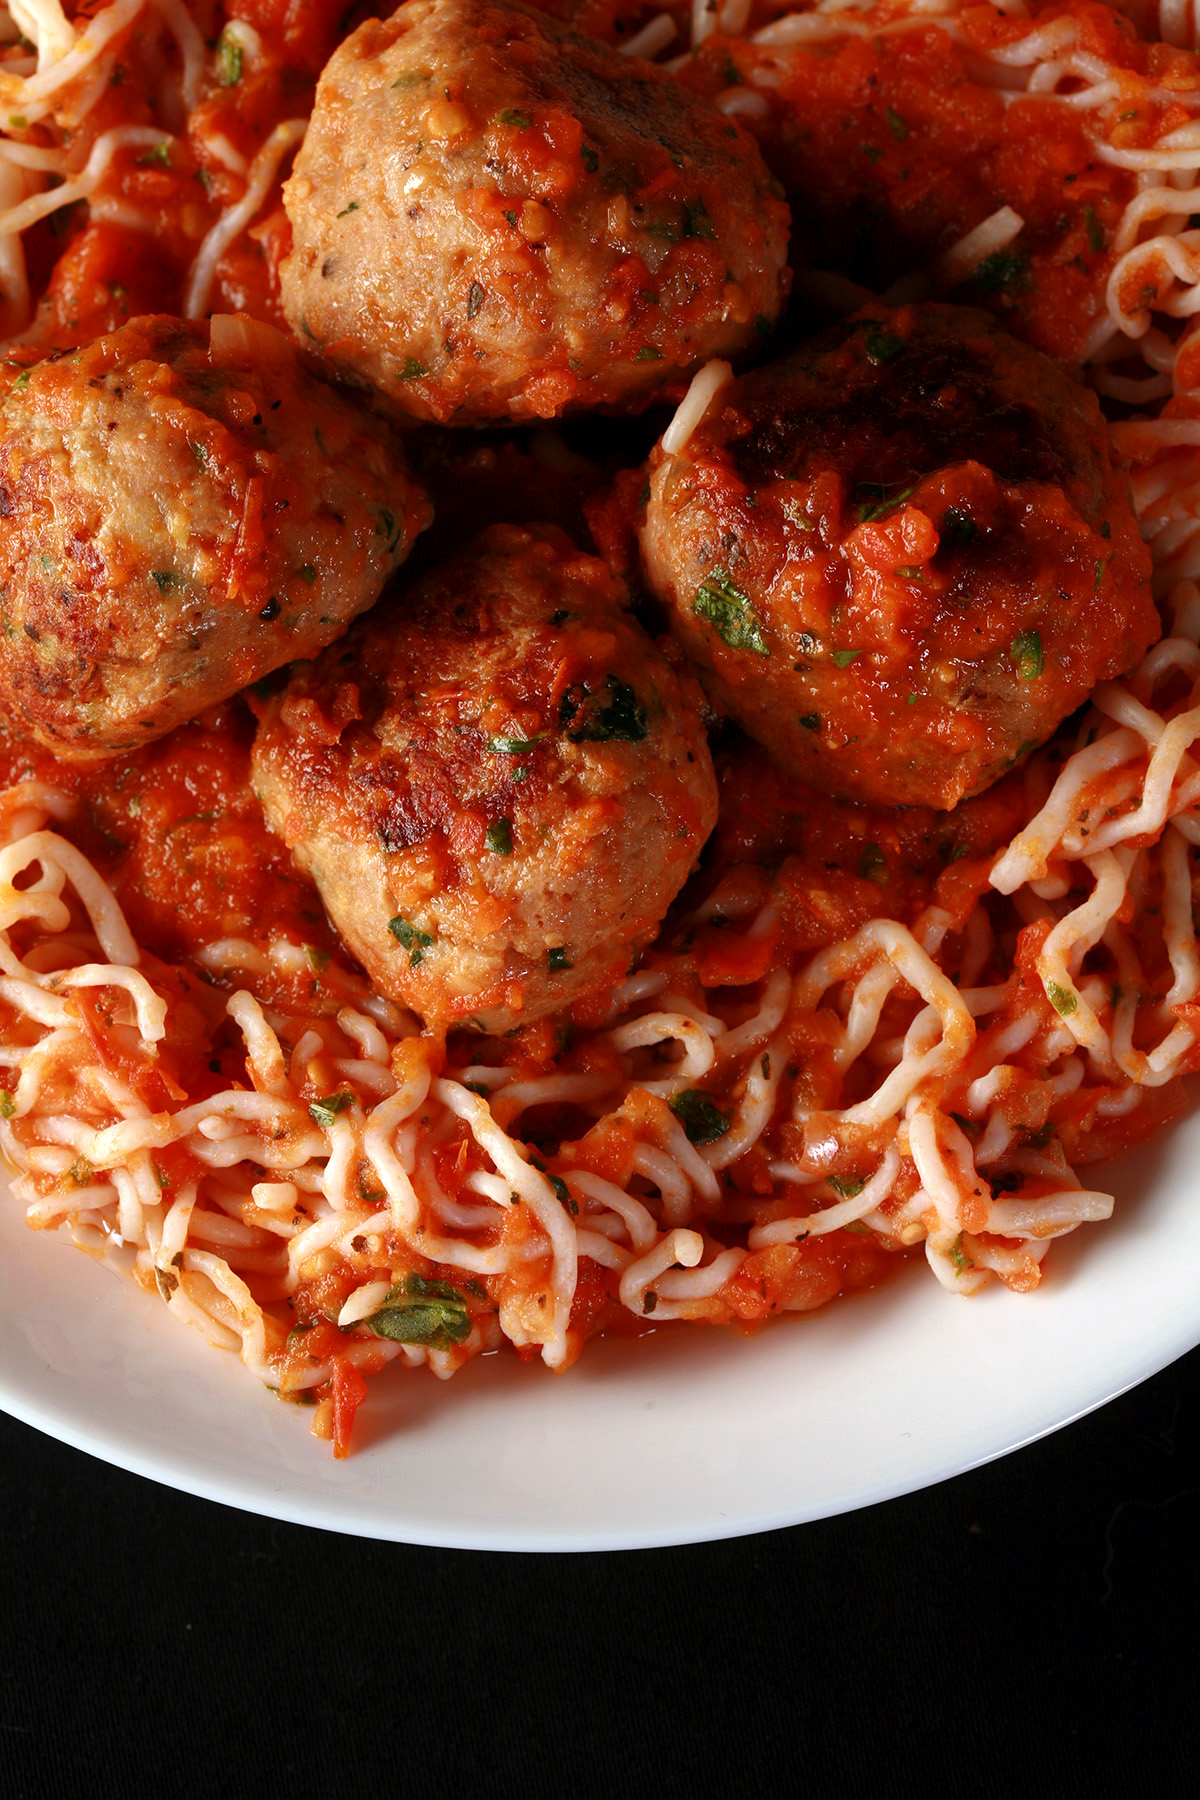 A plate of keto spaghetti and meatballs.